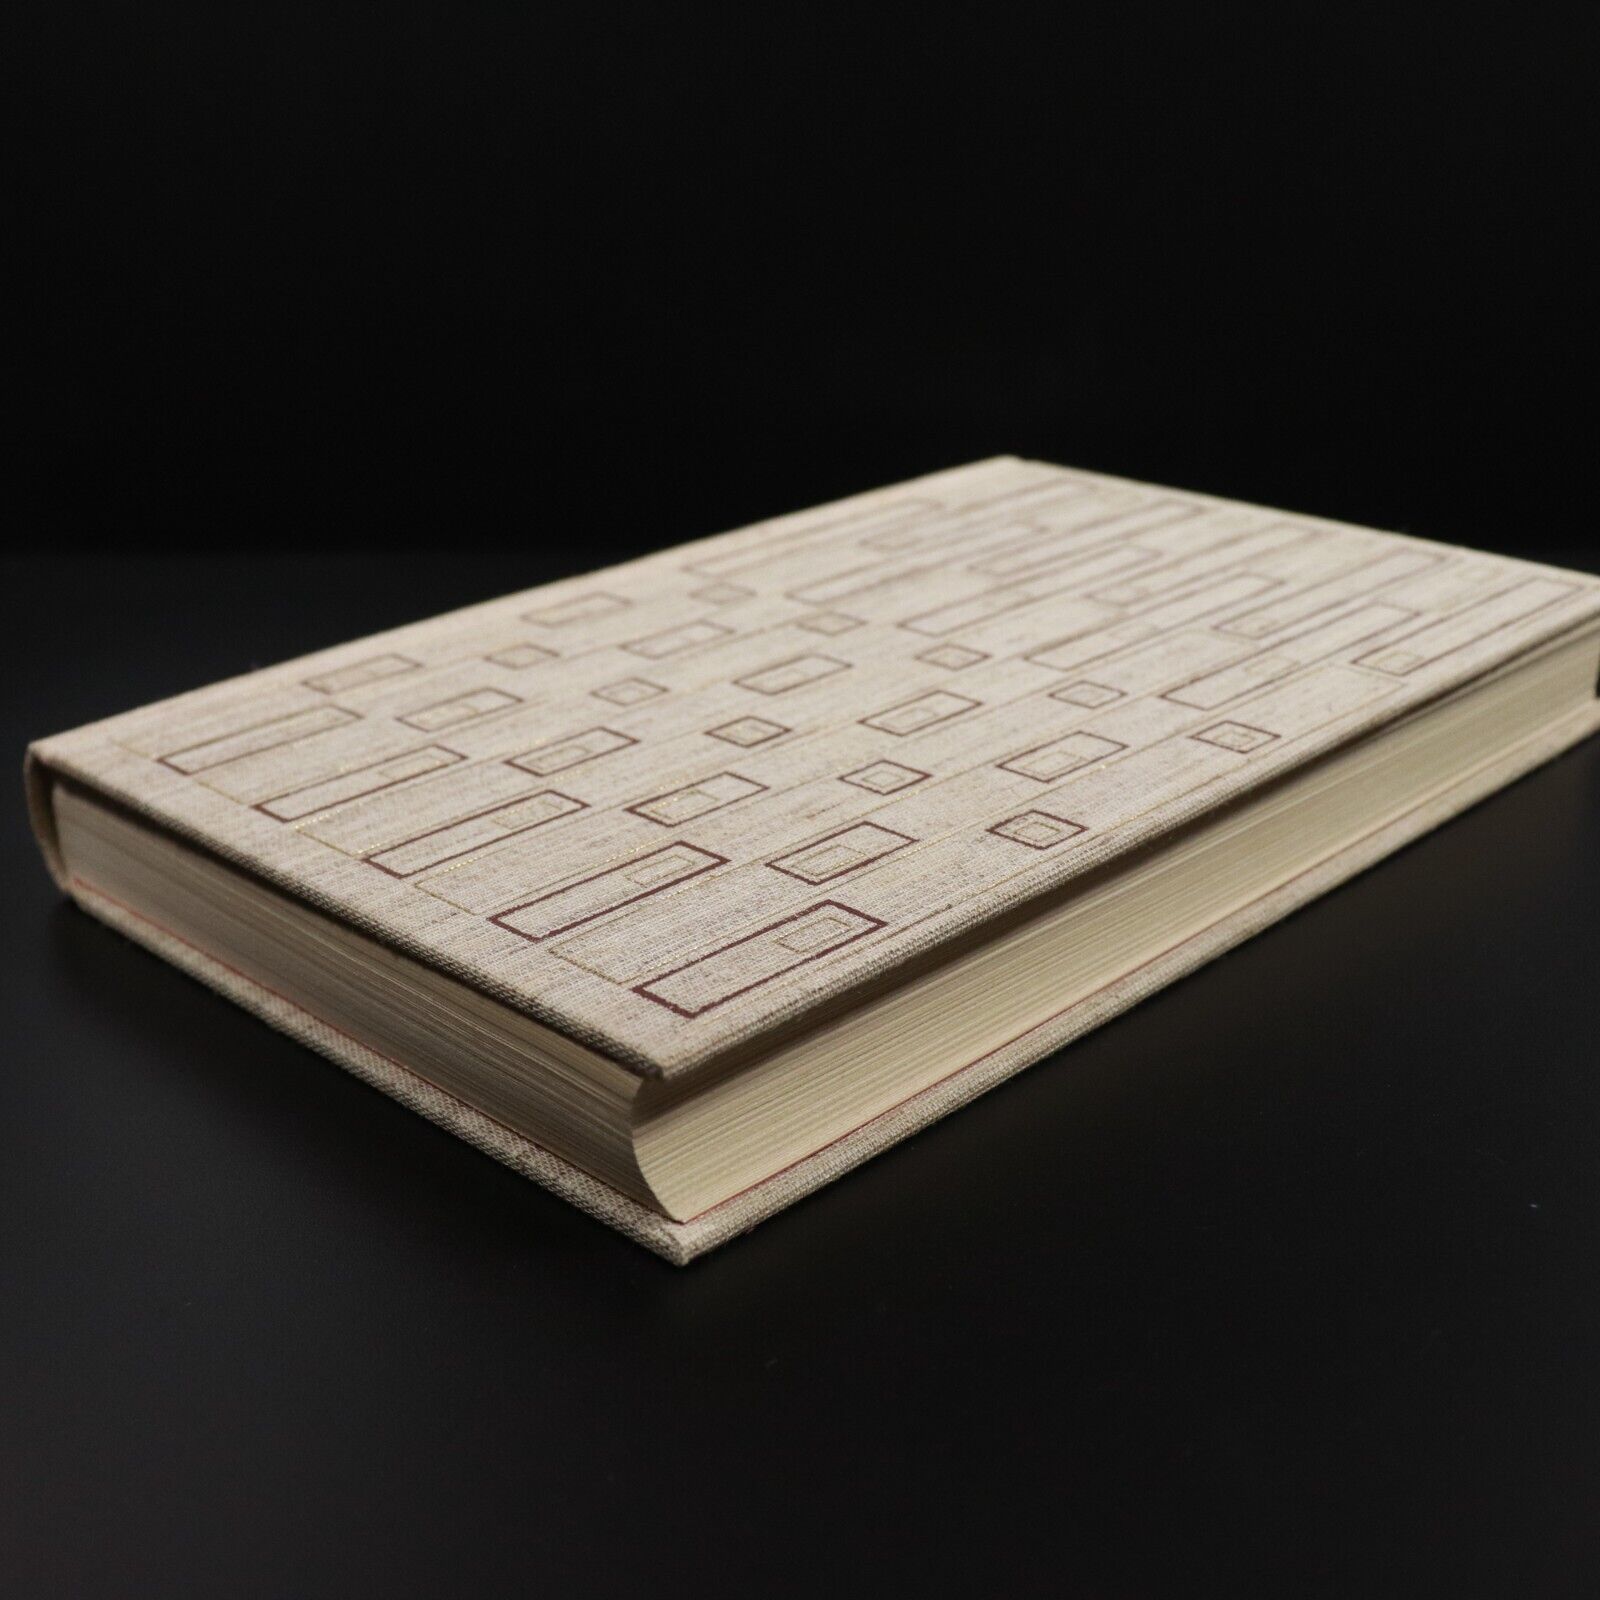 1975 John Aubrey Brief Lives - Folio Society British History Book